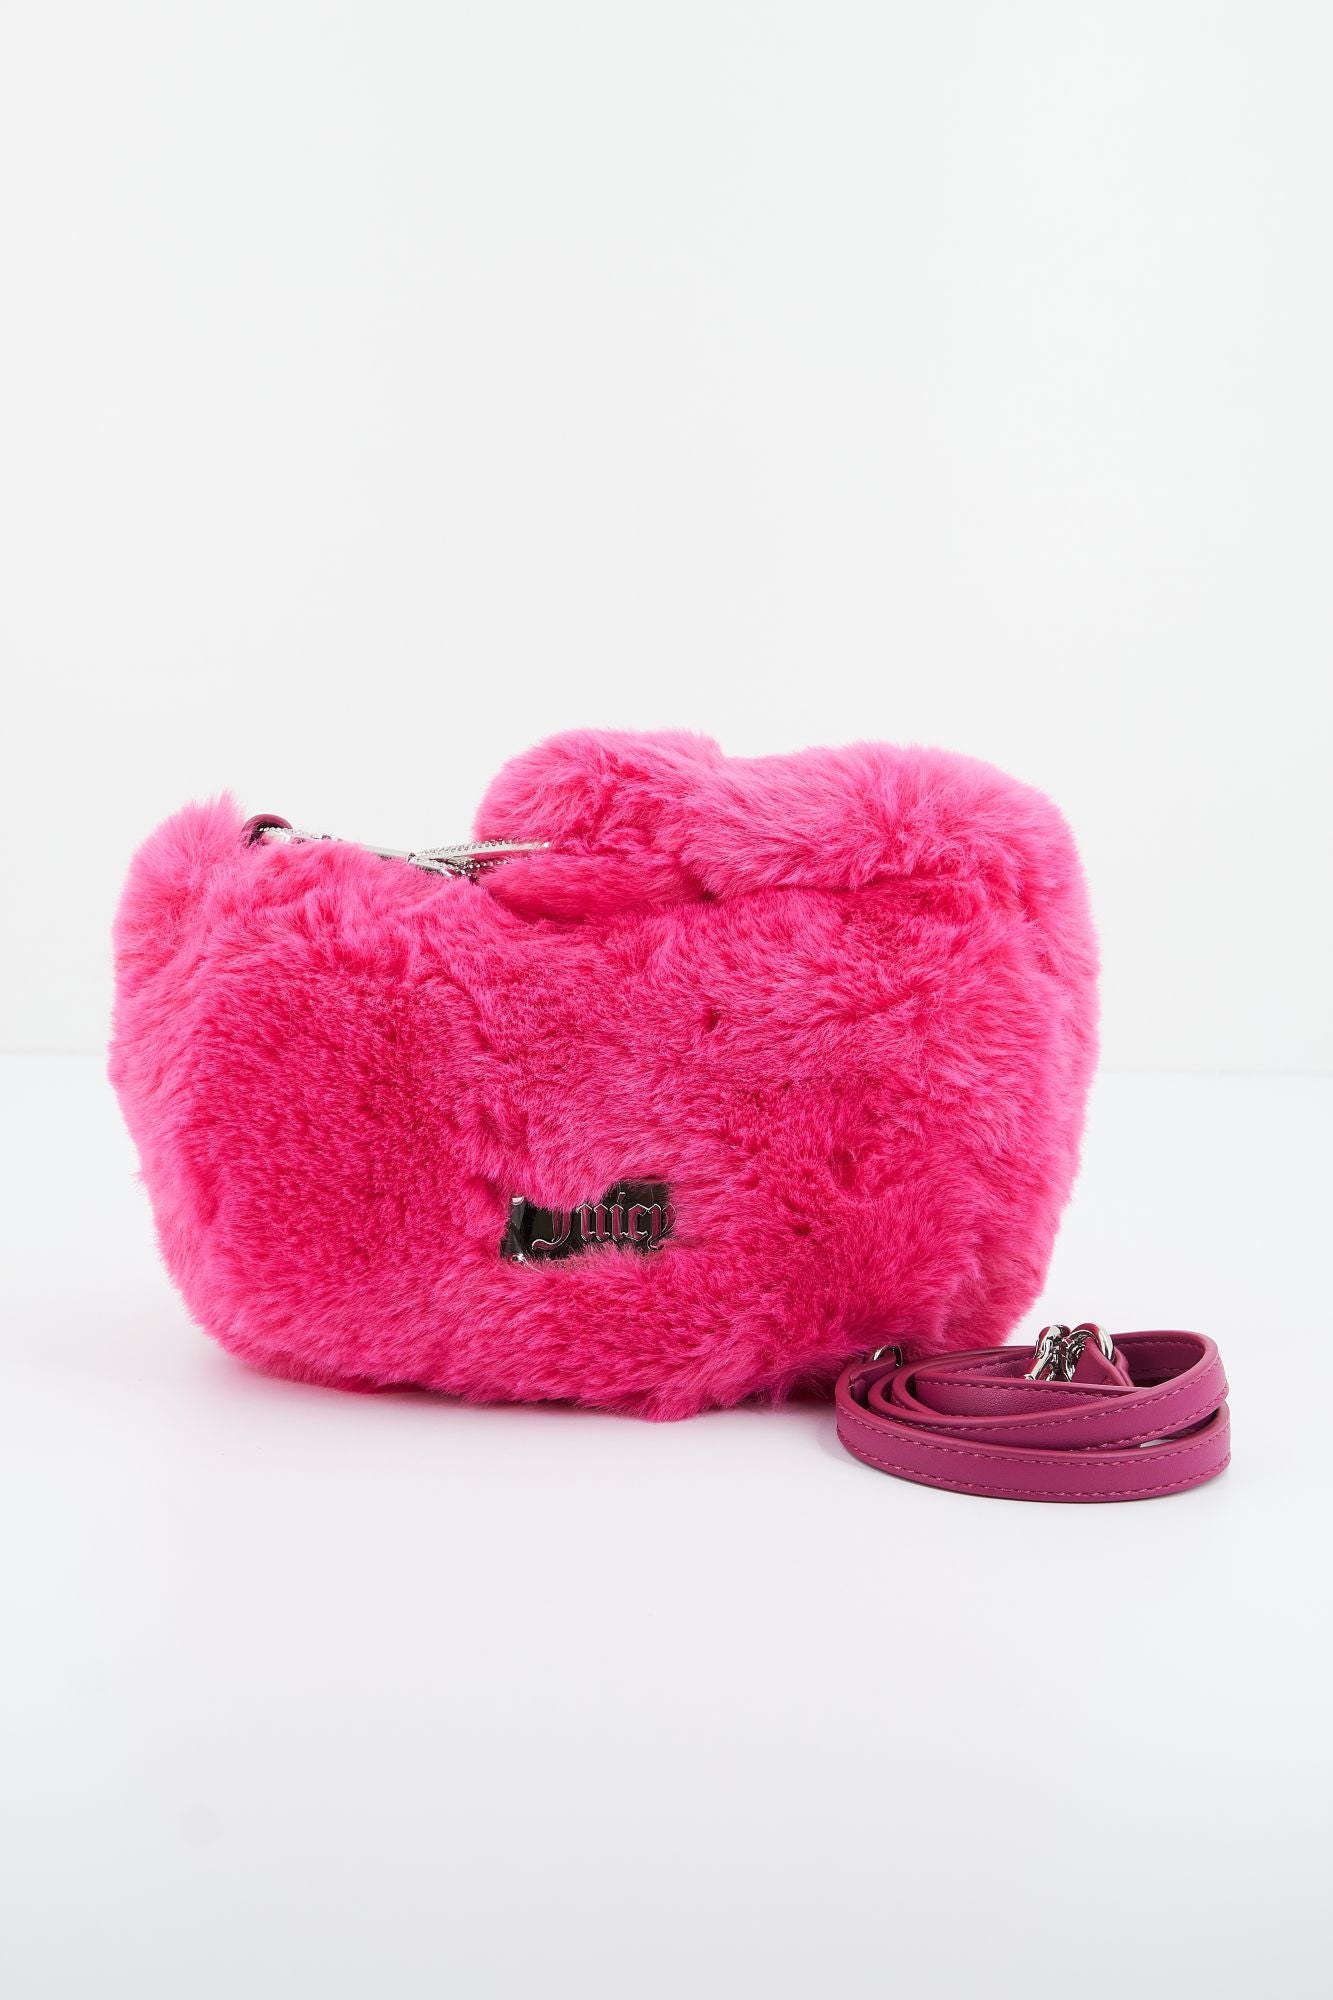 JUICY COUTURE BERRY SMALL HOBO BAG en color ROSA (1)